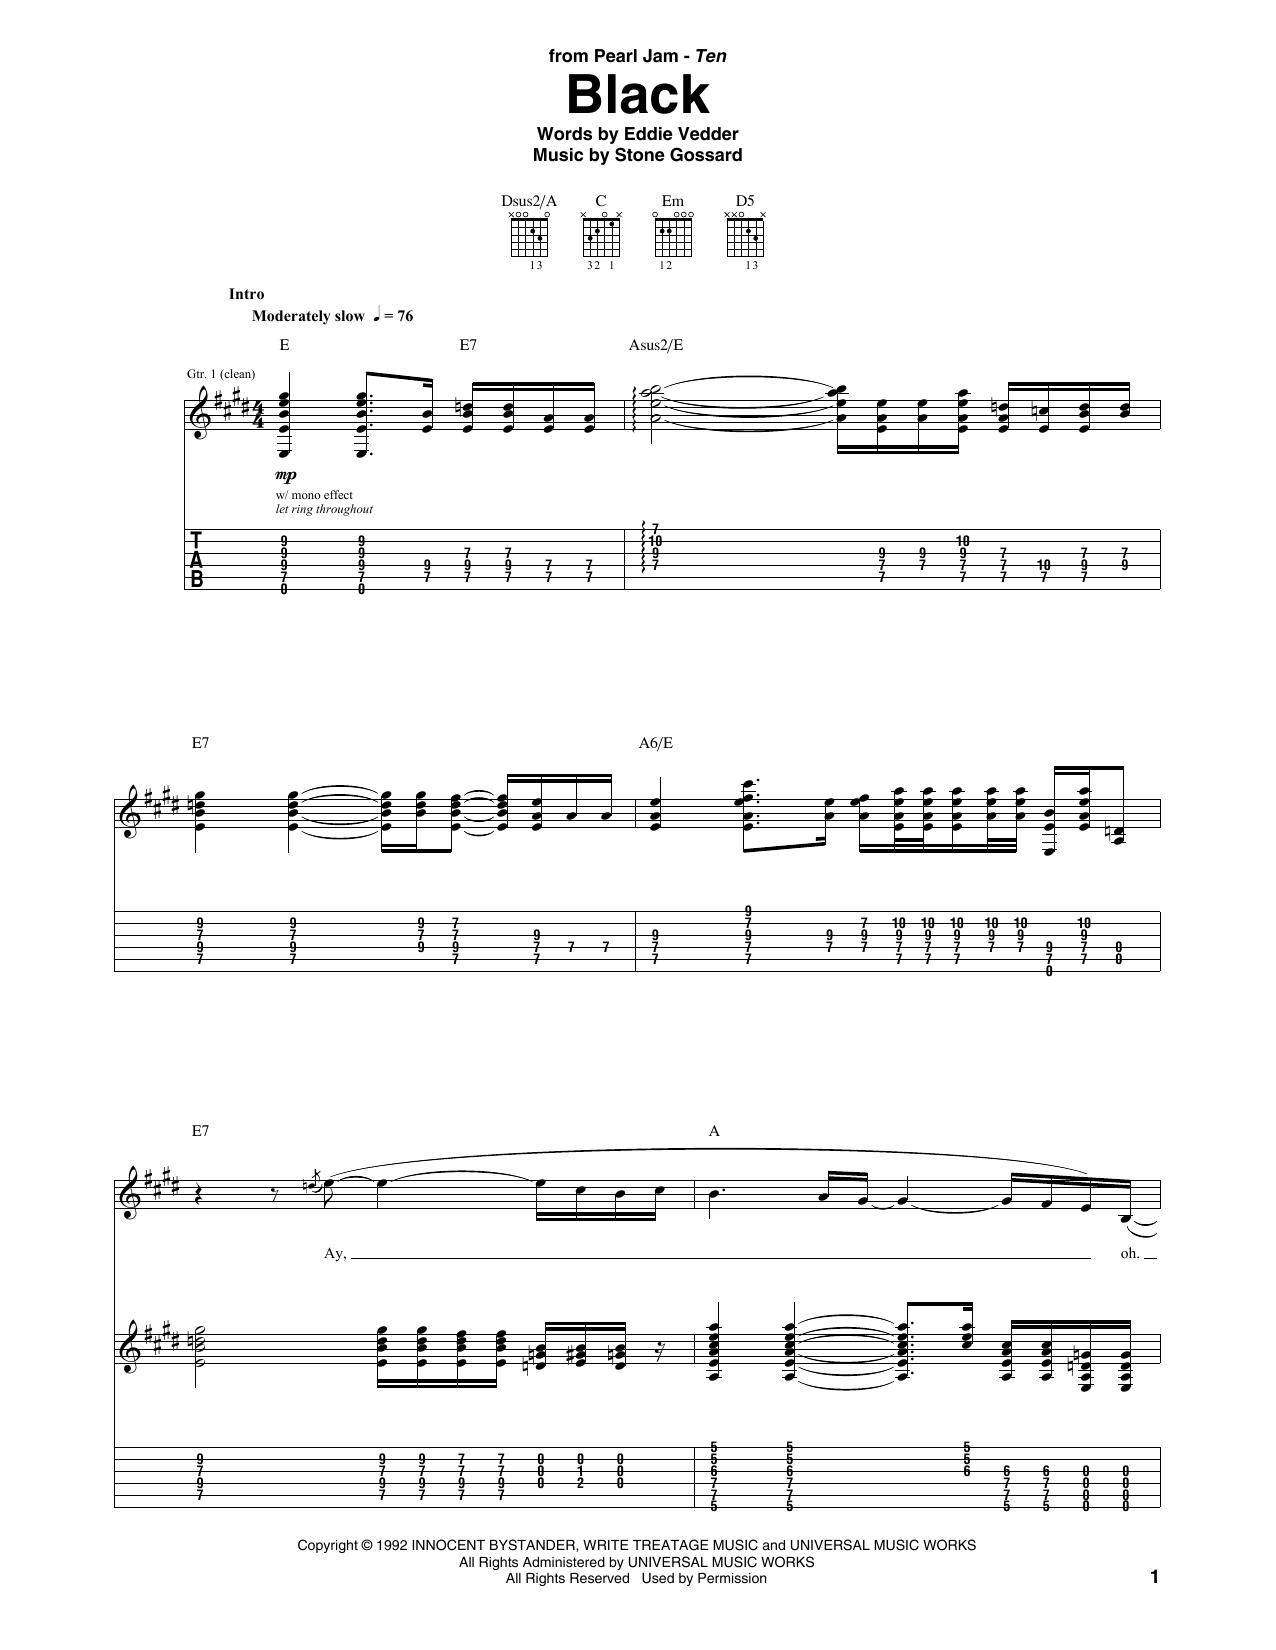 Pearl Jam Black Sheet Music Notes & Chords for Melody Line, Lyrics & Chords - Download or Print PDF